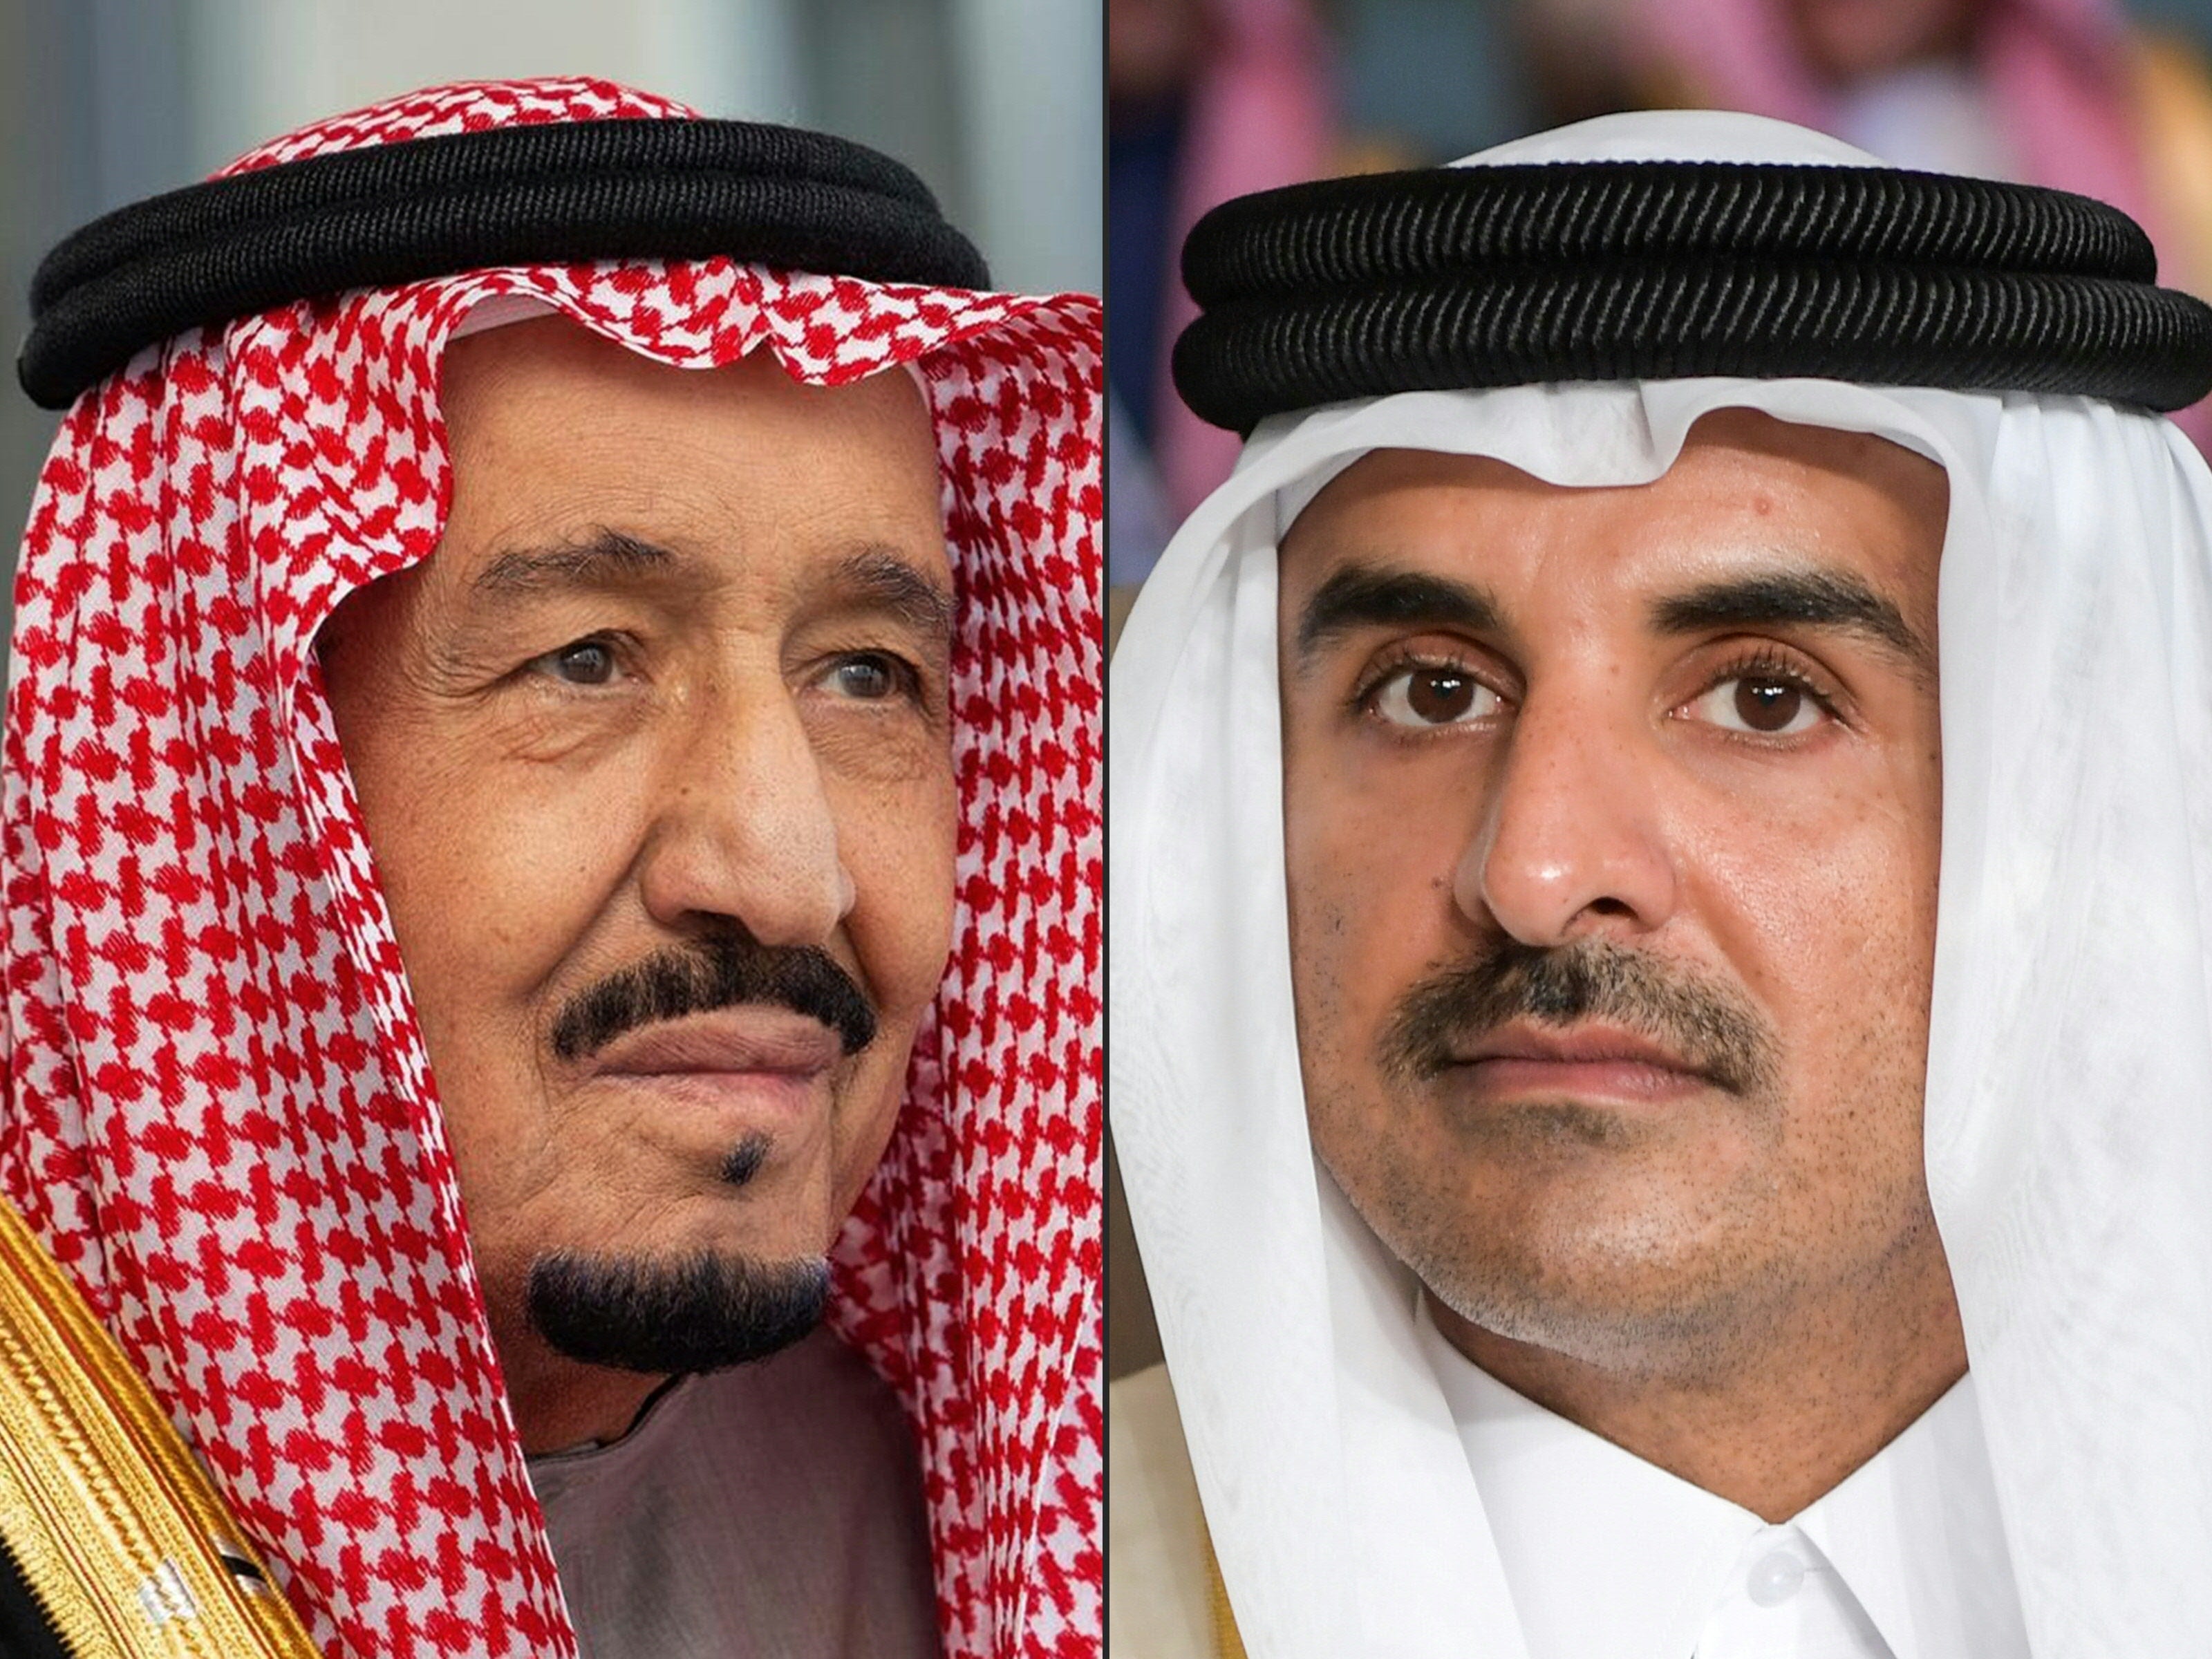 Healing the rift: Saudi Arabia’s King Salman bin Abdulaziz (left) and Qatar’s emir Sheikh Tamim bin Hamad Al-Thani